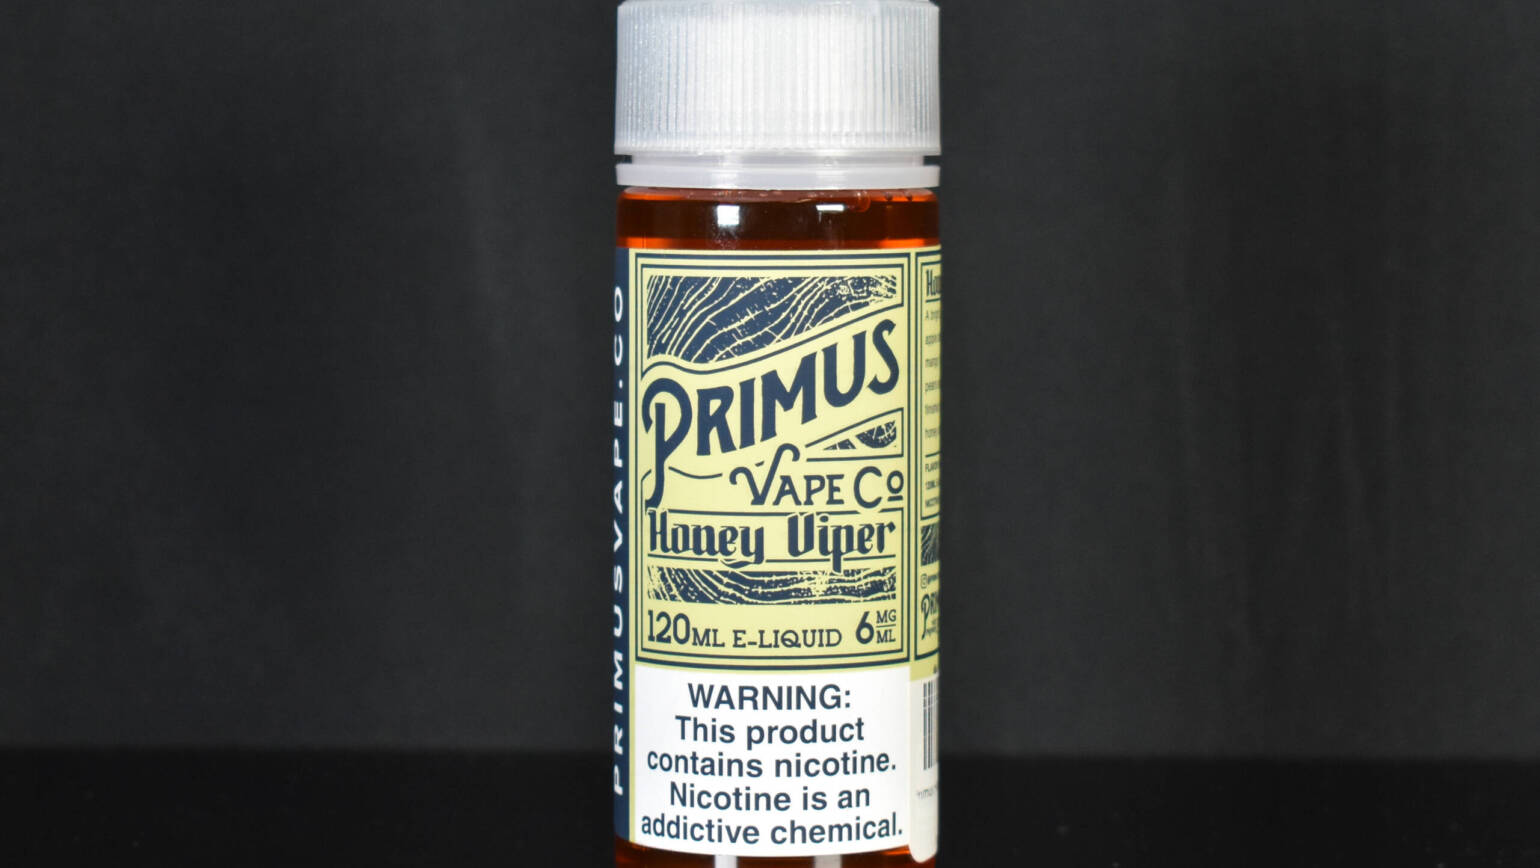 Primus Vape Co – Honey Viper